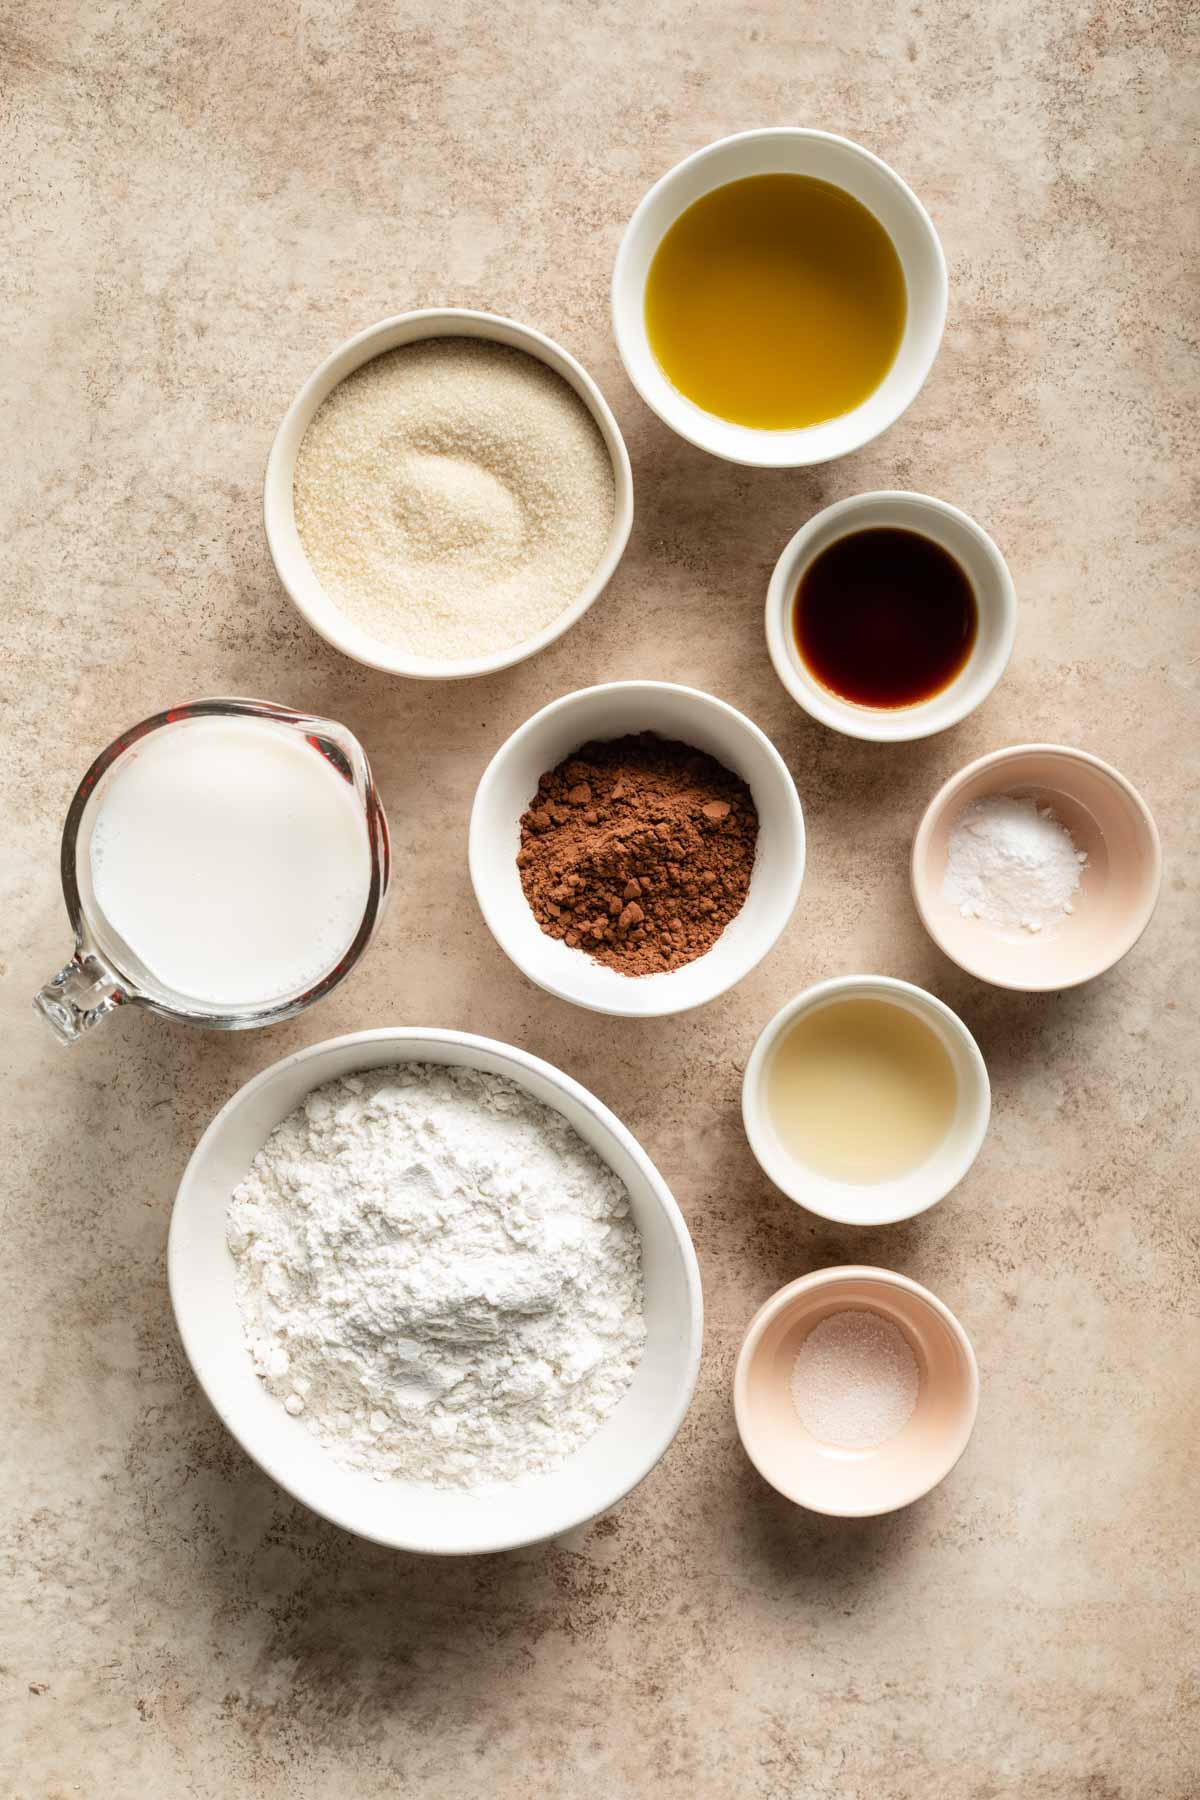 Ingredients to make air fryer cake arranged in individual bowls.